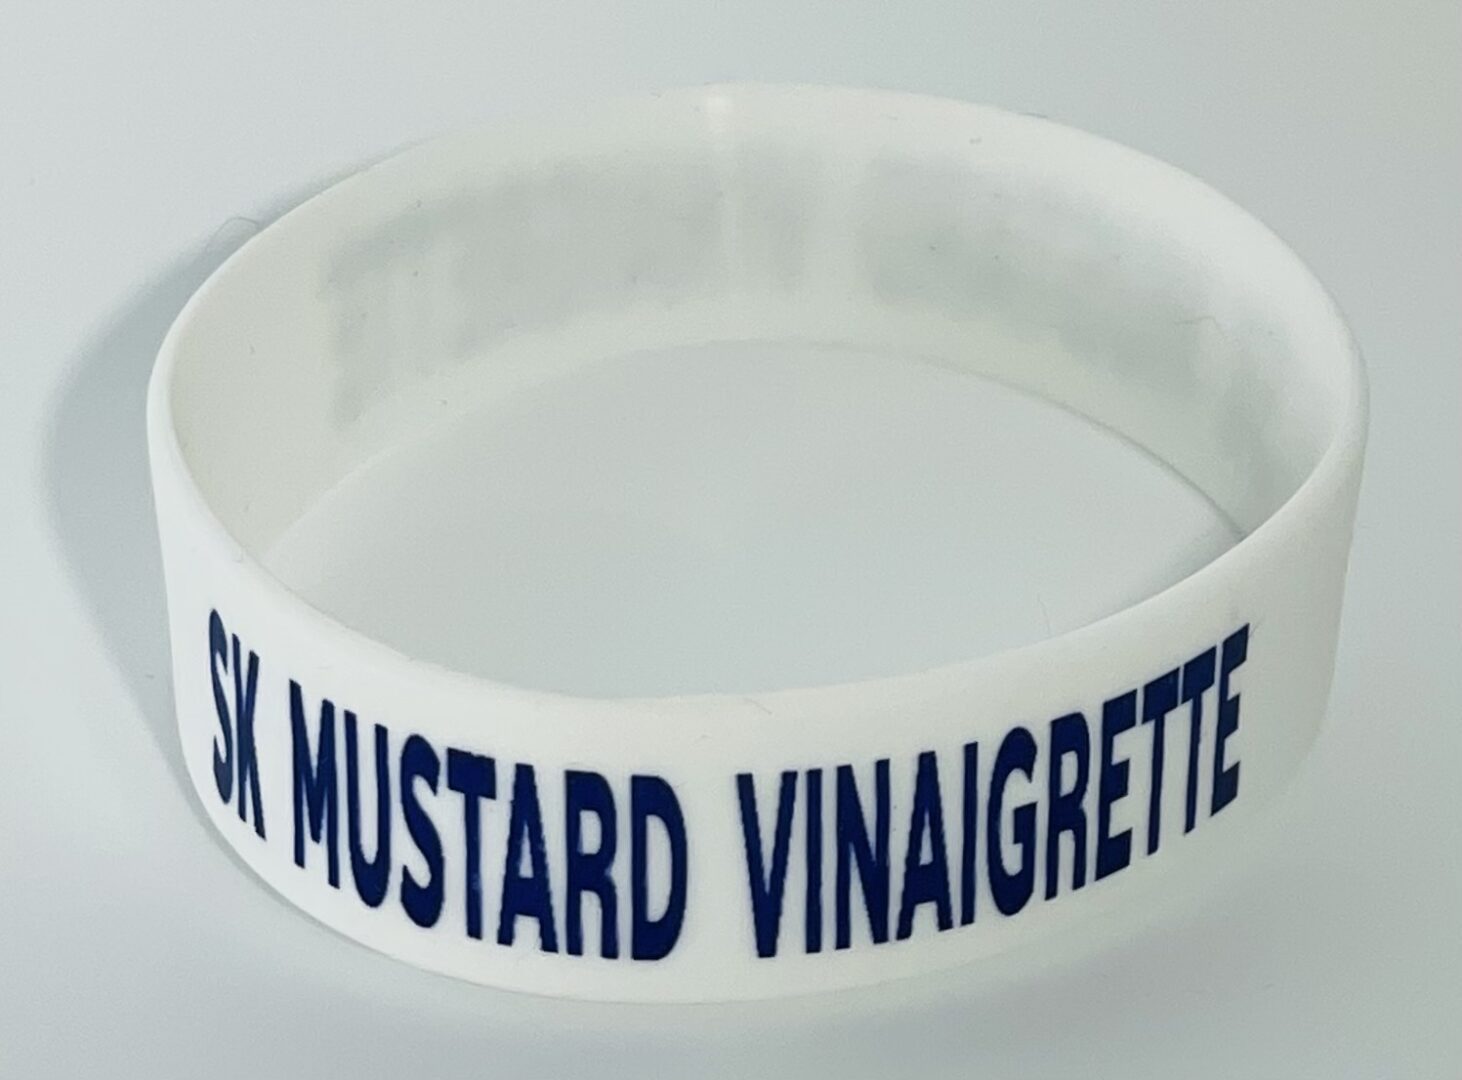 SK Mustard Vinaigrette culinary band